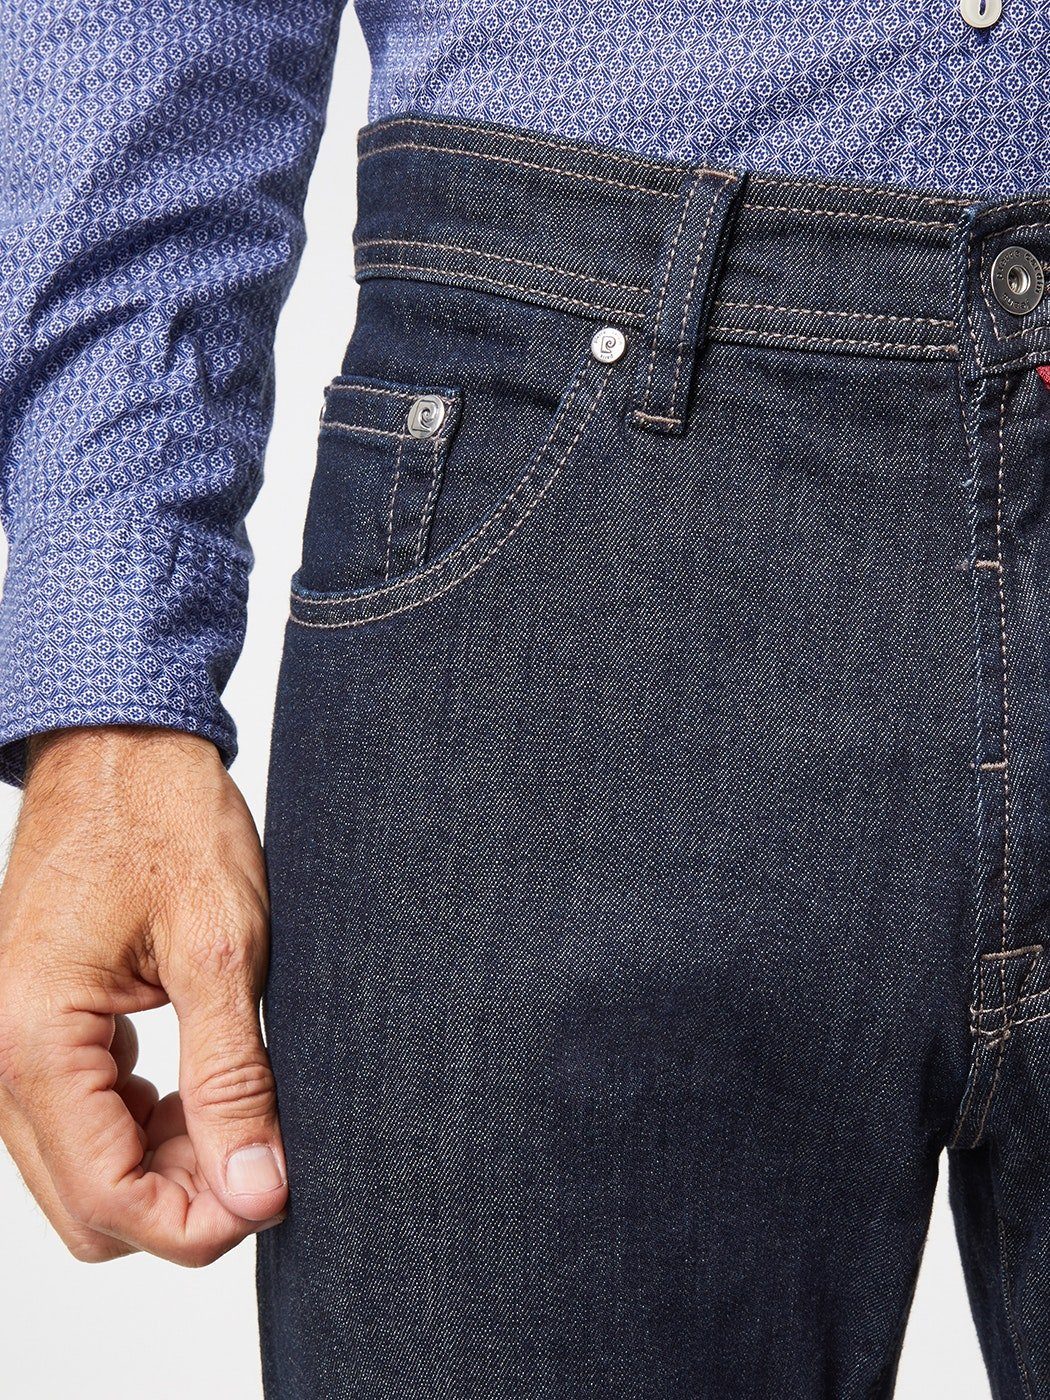 THERMO rinse 5-Pocket-Jeans indigo CARDIN dark DEAUVILLE Cardin 7010.01 Pierre 3496 PIERRE -